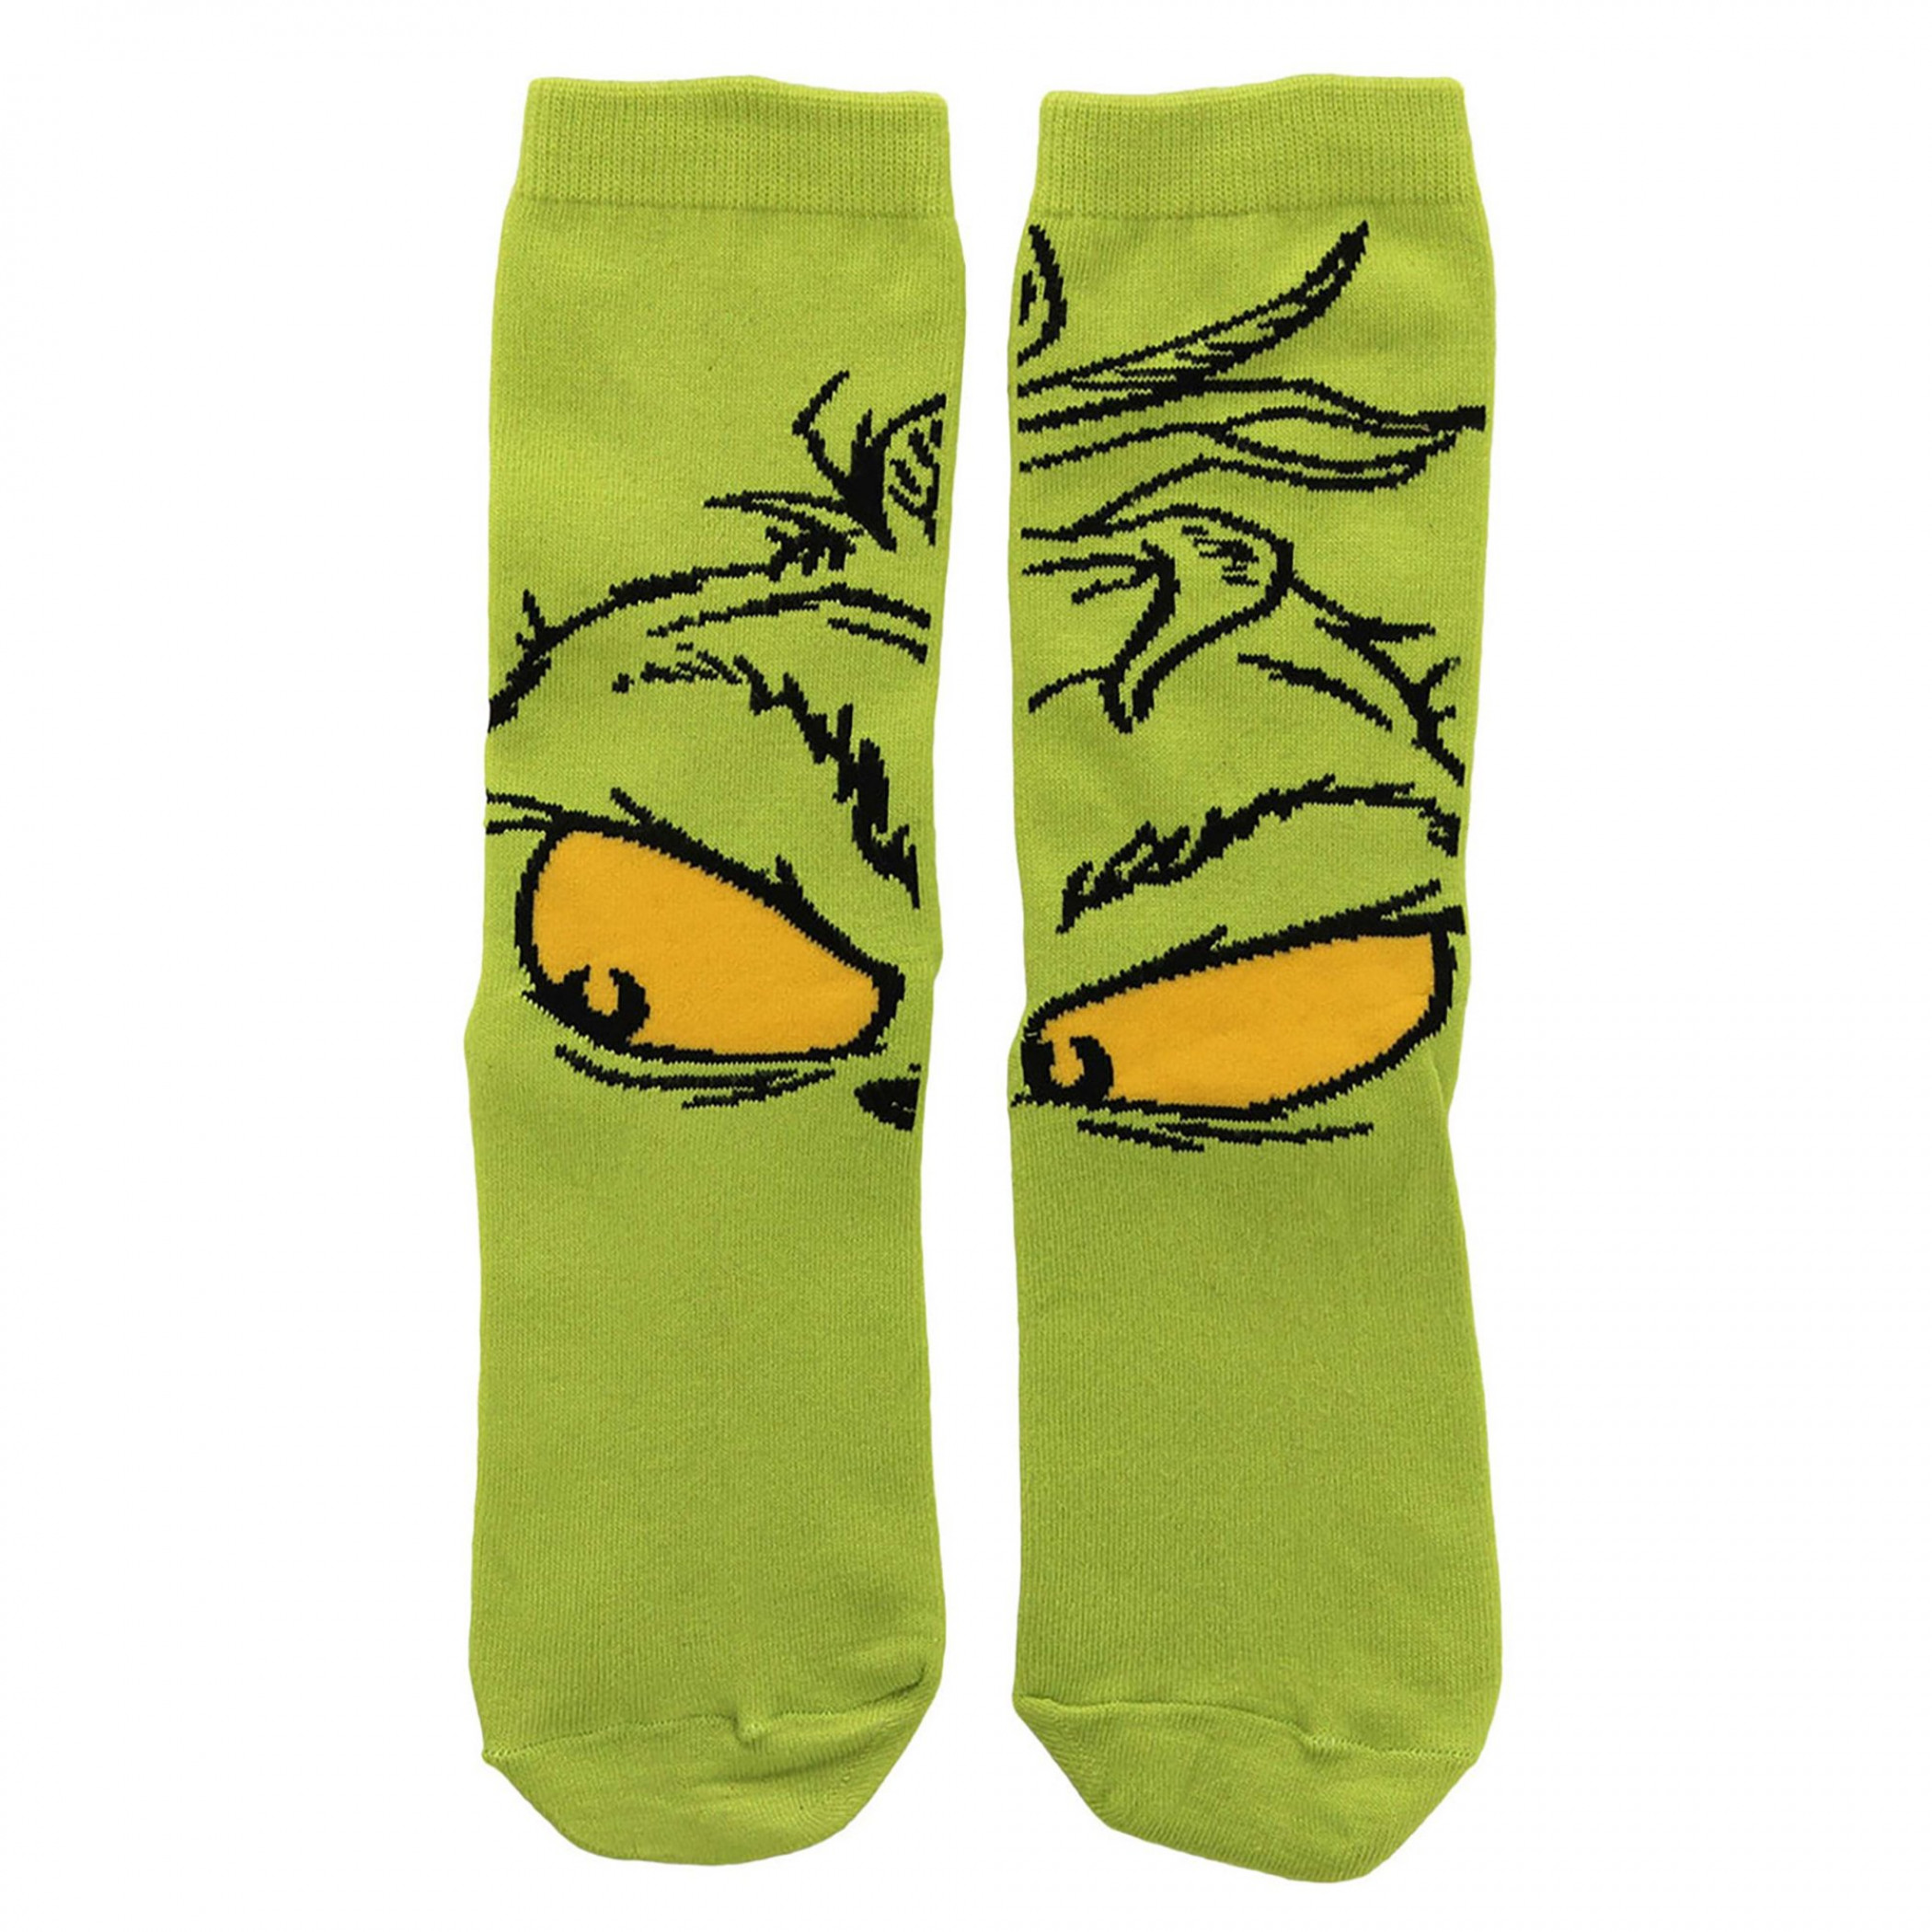 The Grinch Character Print Crew Socks